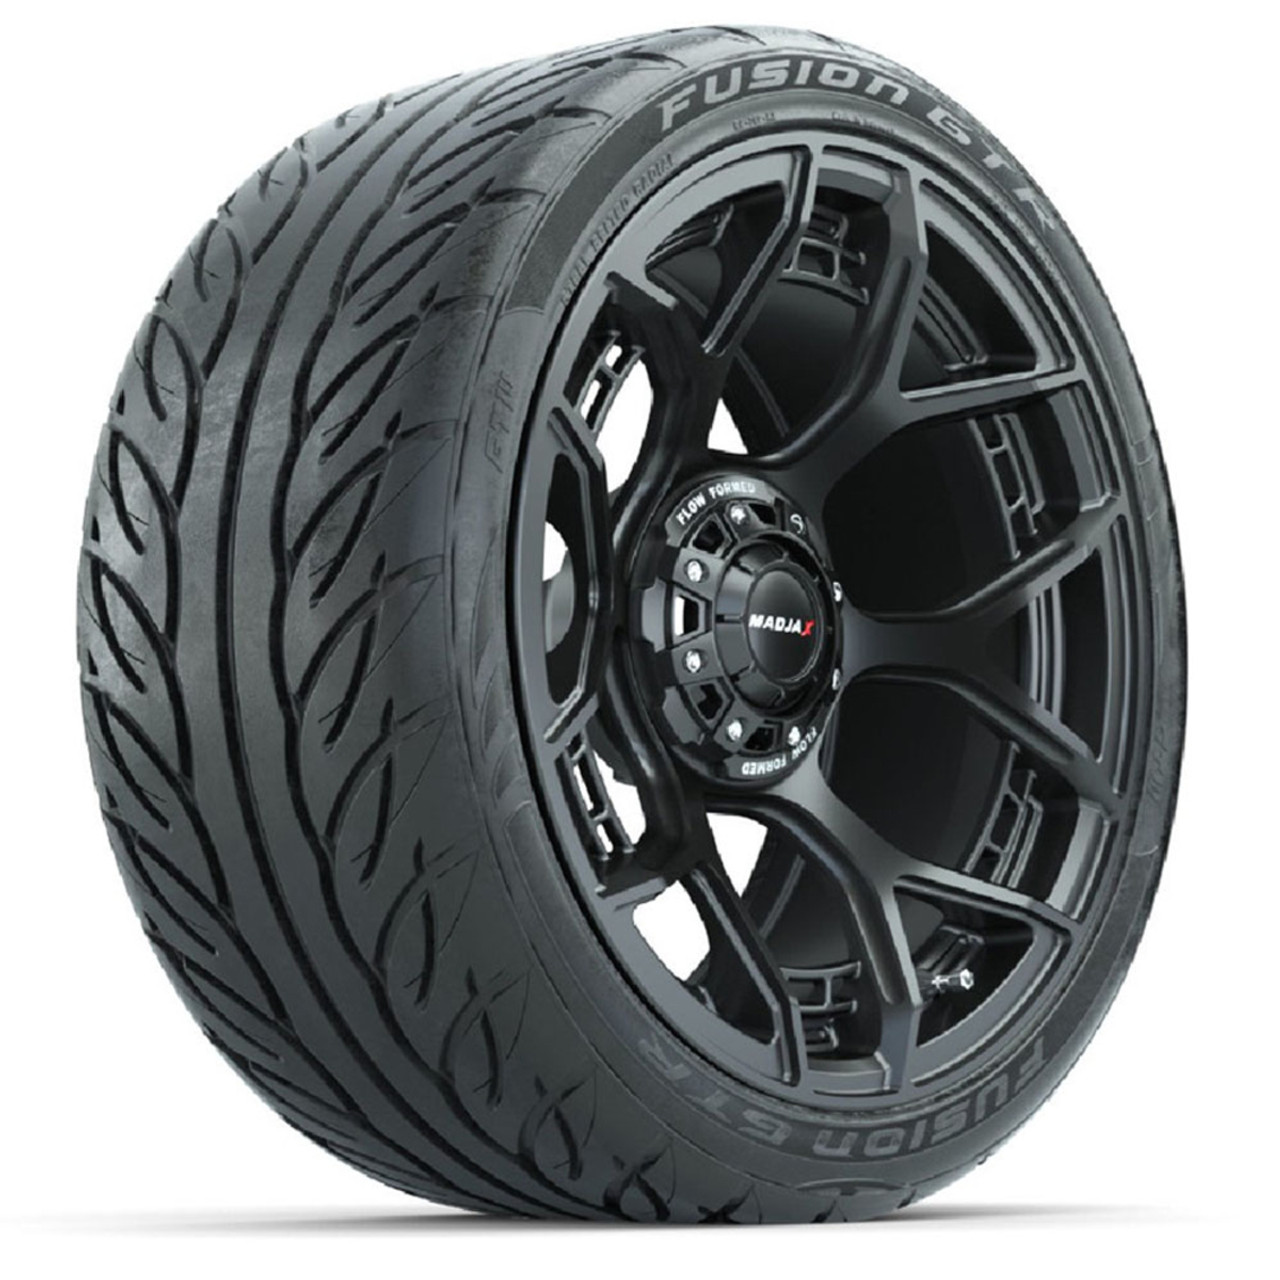 Set of (4) 15" Flow Form Evolution Matte Black Wheels w/ Fusion GTR Street Tires, A19-418